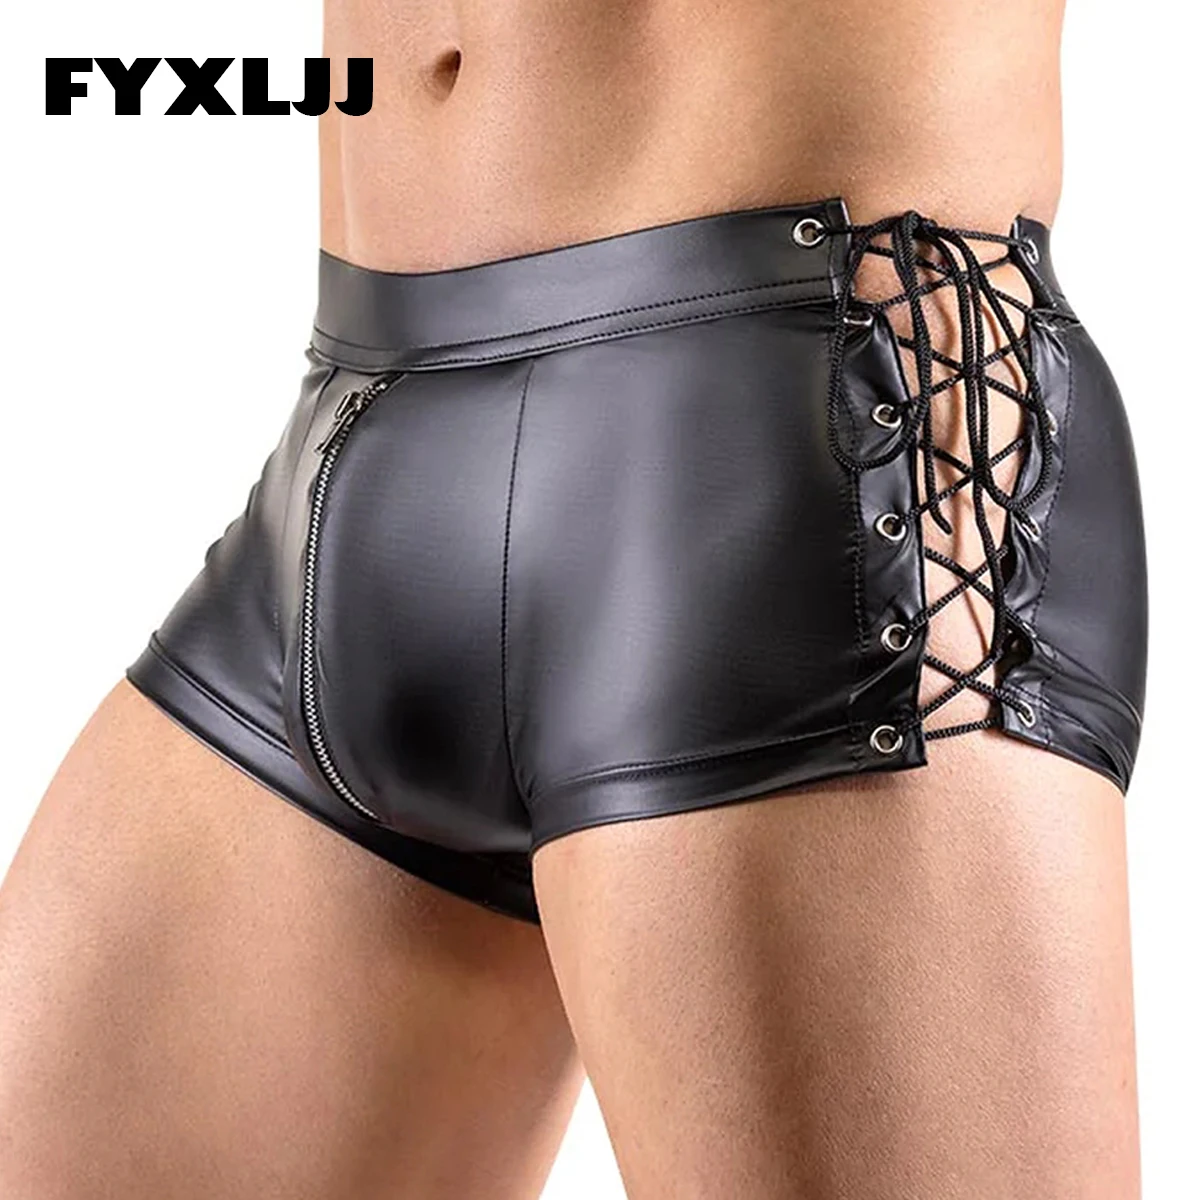 

FYXLJJ Sexy Mens Leather Boxershort Fetish Underwear Male Leather Exotic Bandage Boxers Bulge Pouch Shorts Performance Underpant